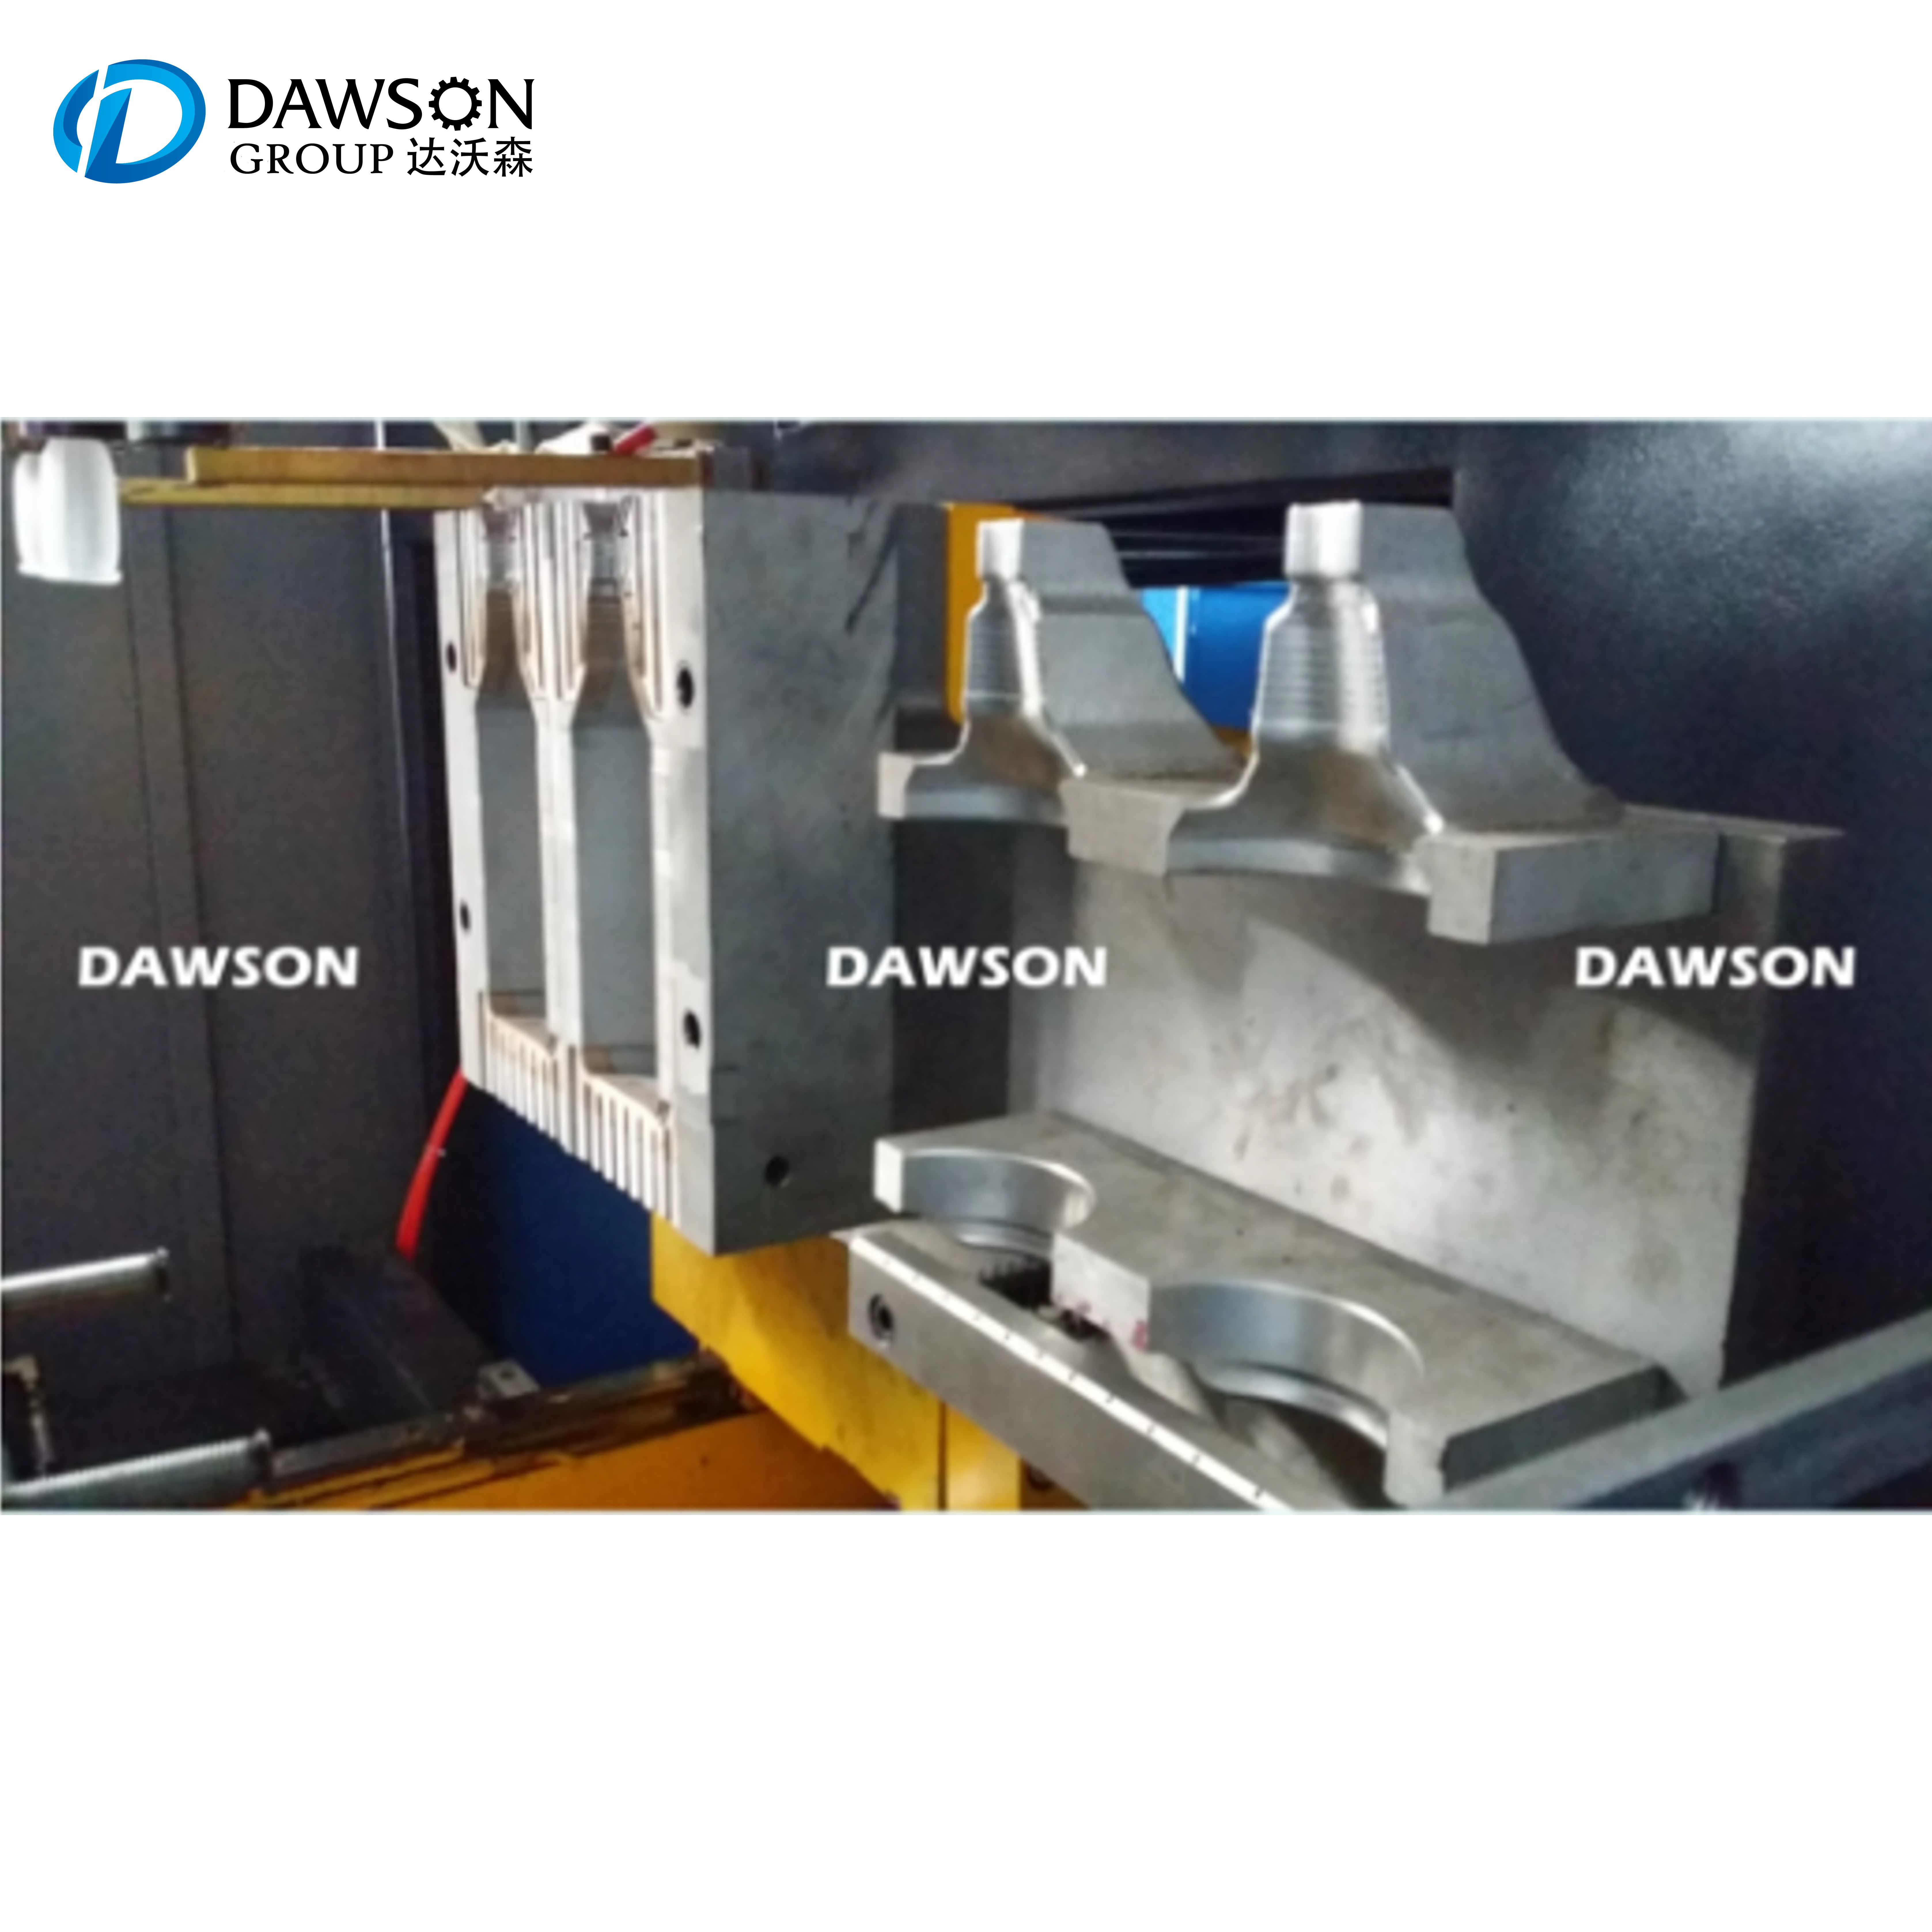 Blow Molding Machine DAWSON Blowing Mould Making Manufacturing Equipment Line Plastic Blow Moulding Production Machine